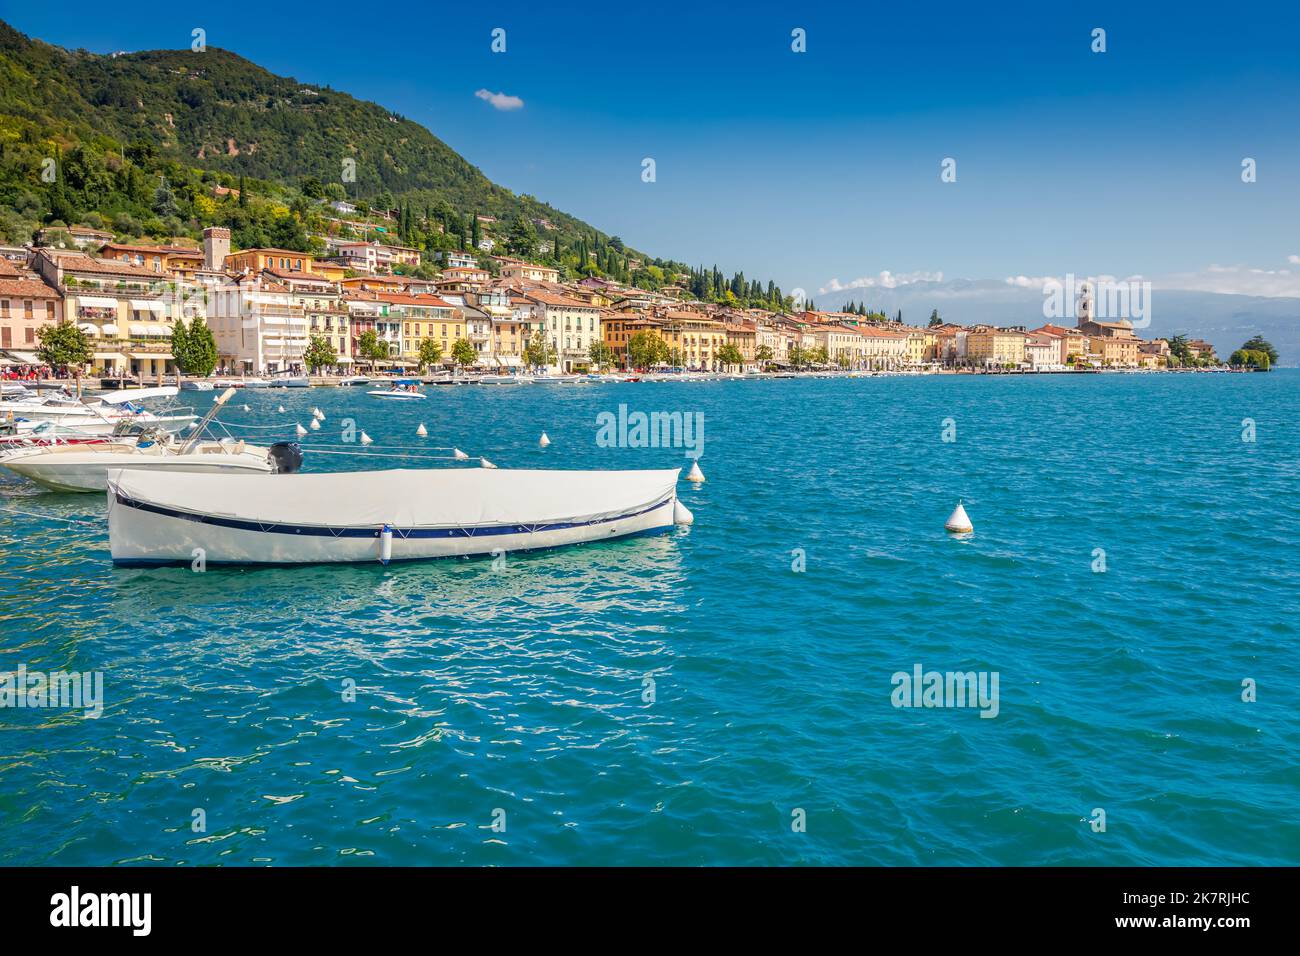 Idyllic lake Garda coastline and mediterranean village with sailboats, Italy Stock Photo